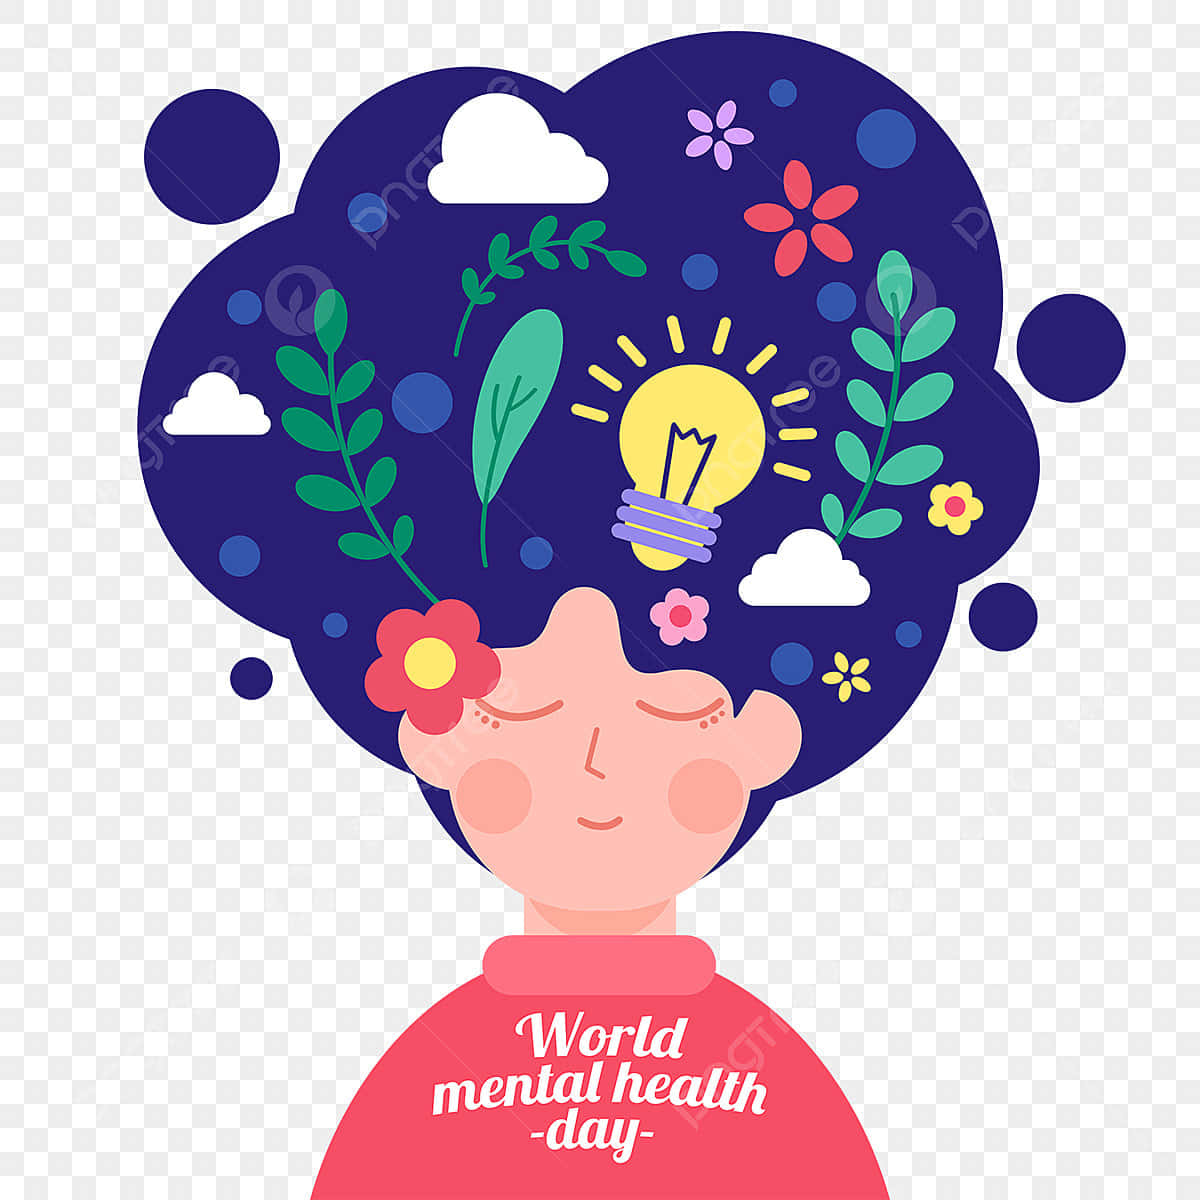 World Mental Health Day, World Mental Health Day, World Mental Health Day, World Mental Health Day, World Mental Health Day, World Mental Health Day, World Mental